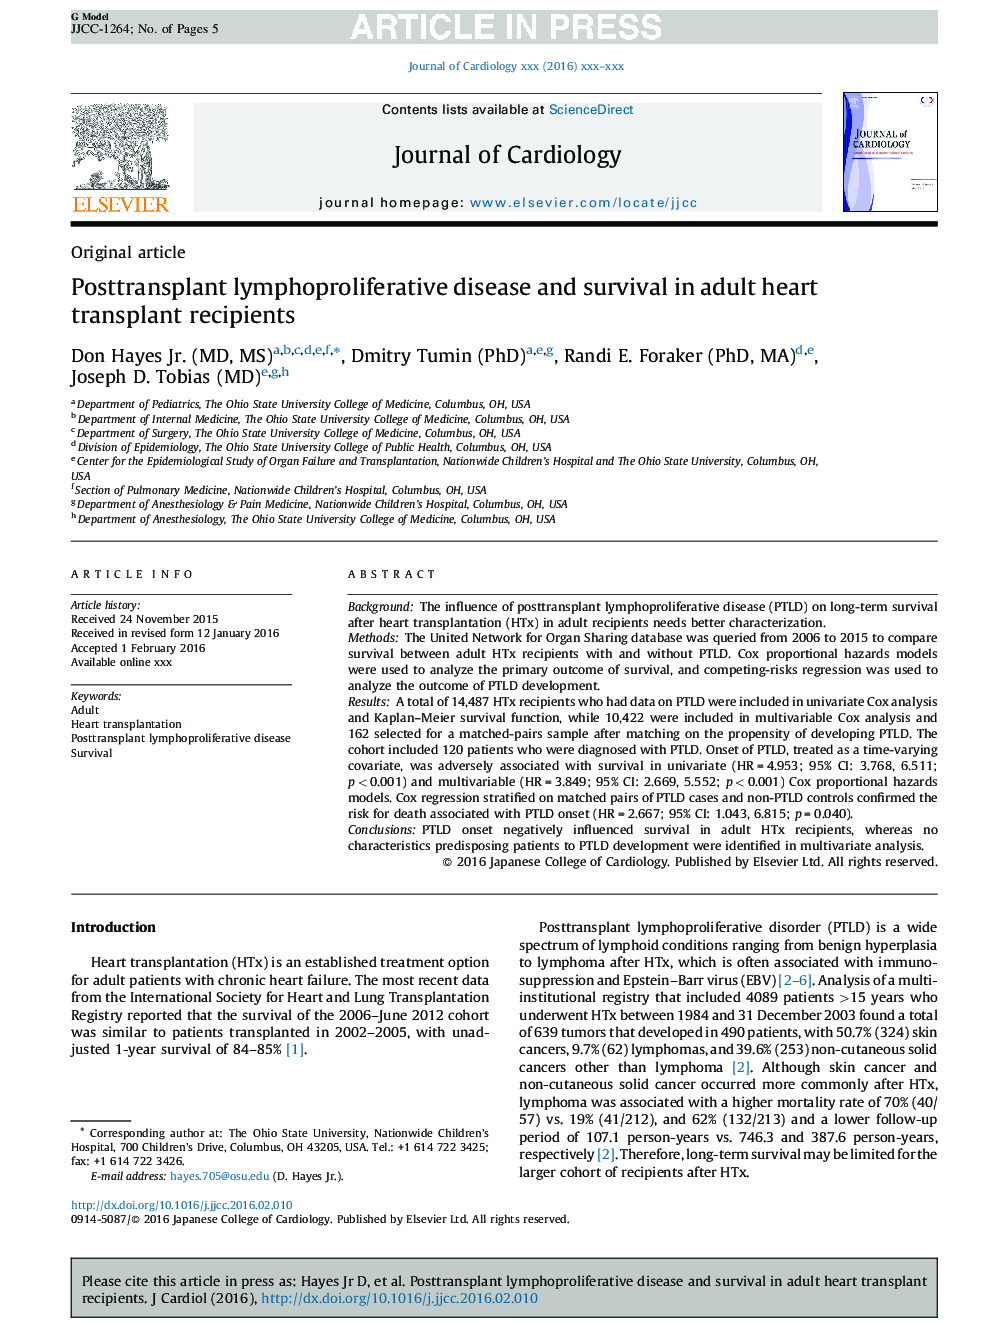 Posttransplant lymphoproliferative disease and survival in adult heart transplant recipients